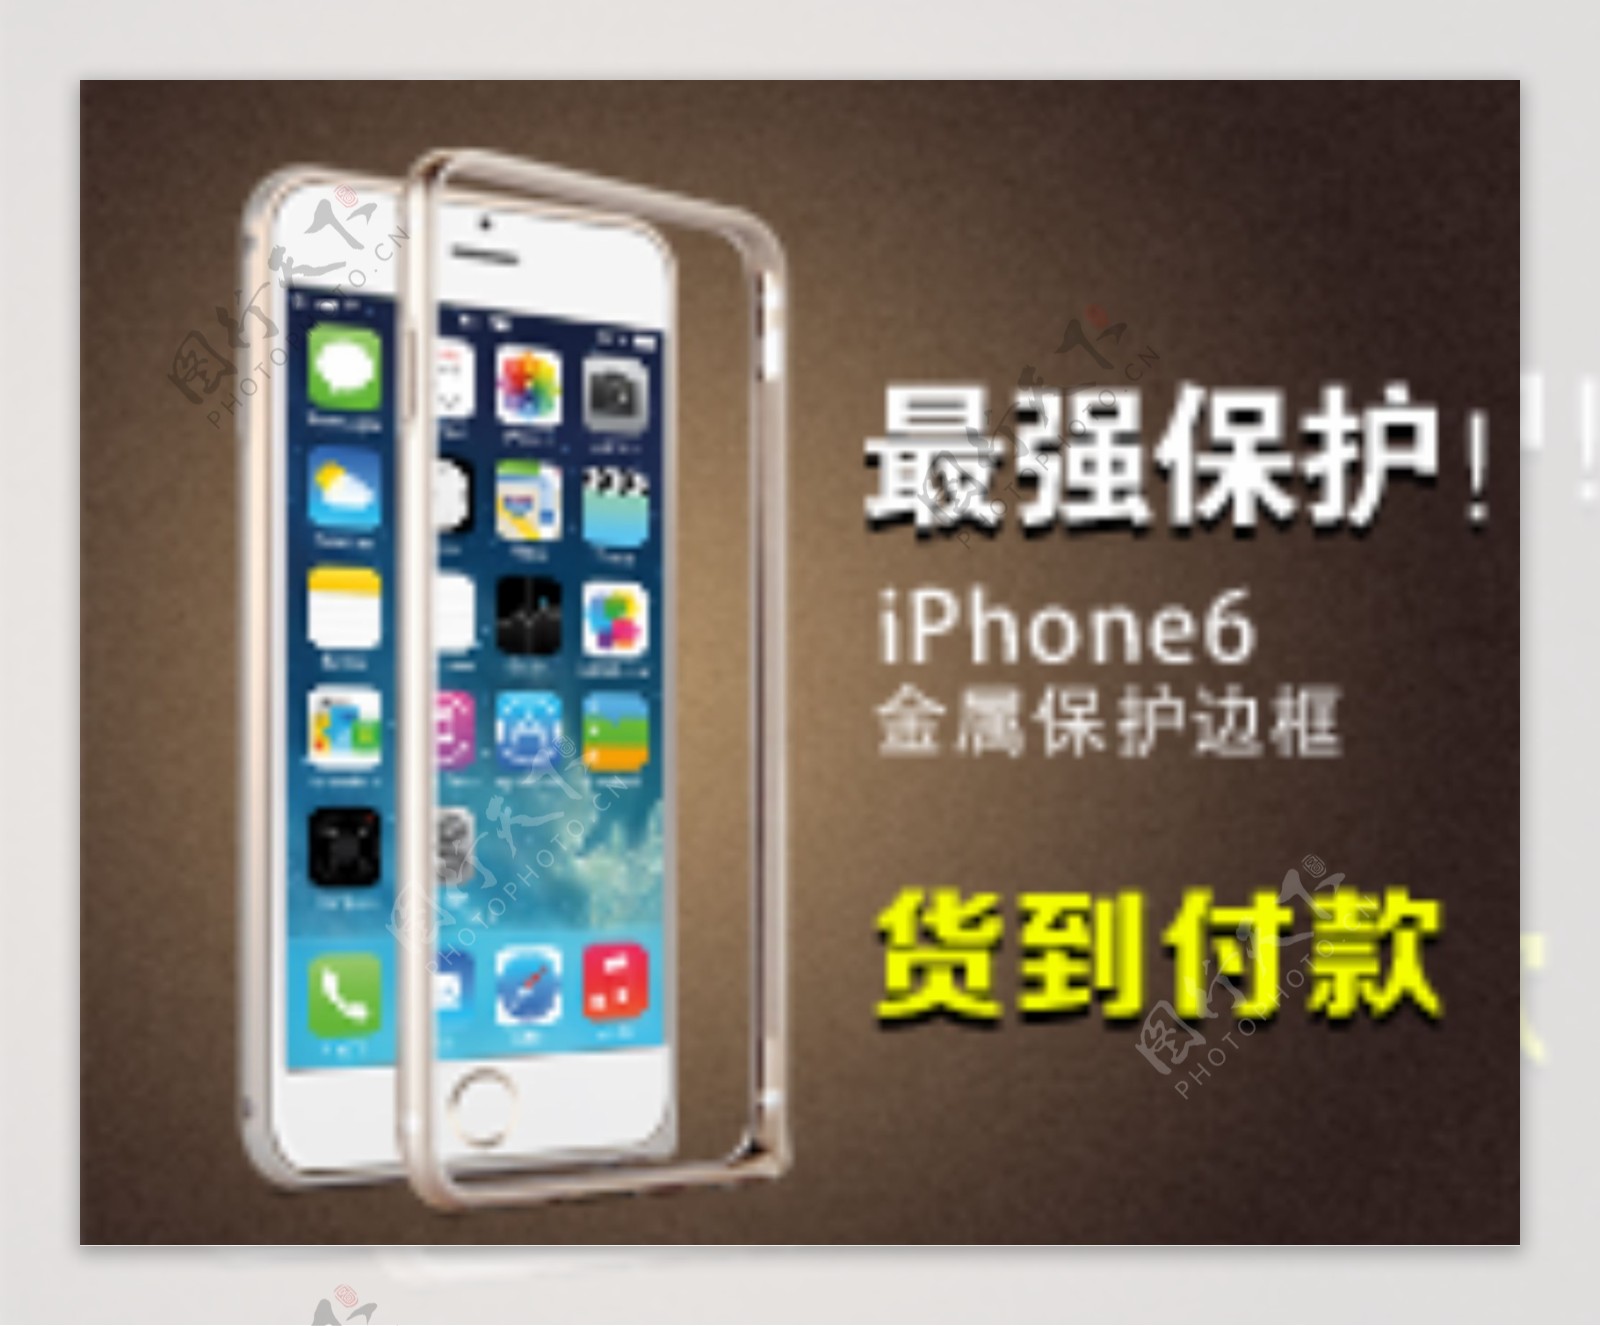 iPhone6保护框图片